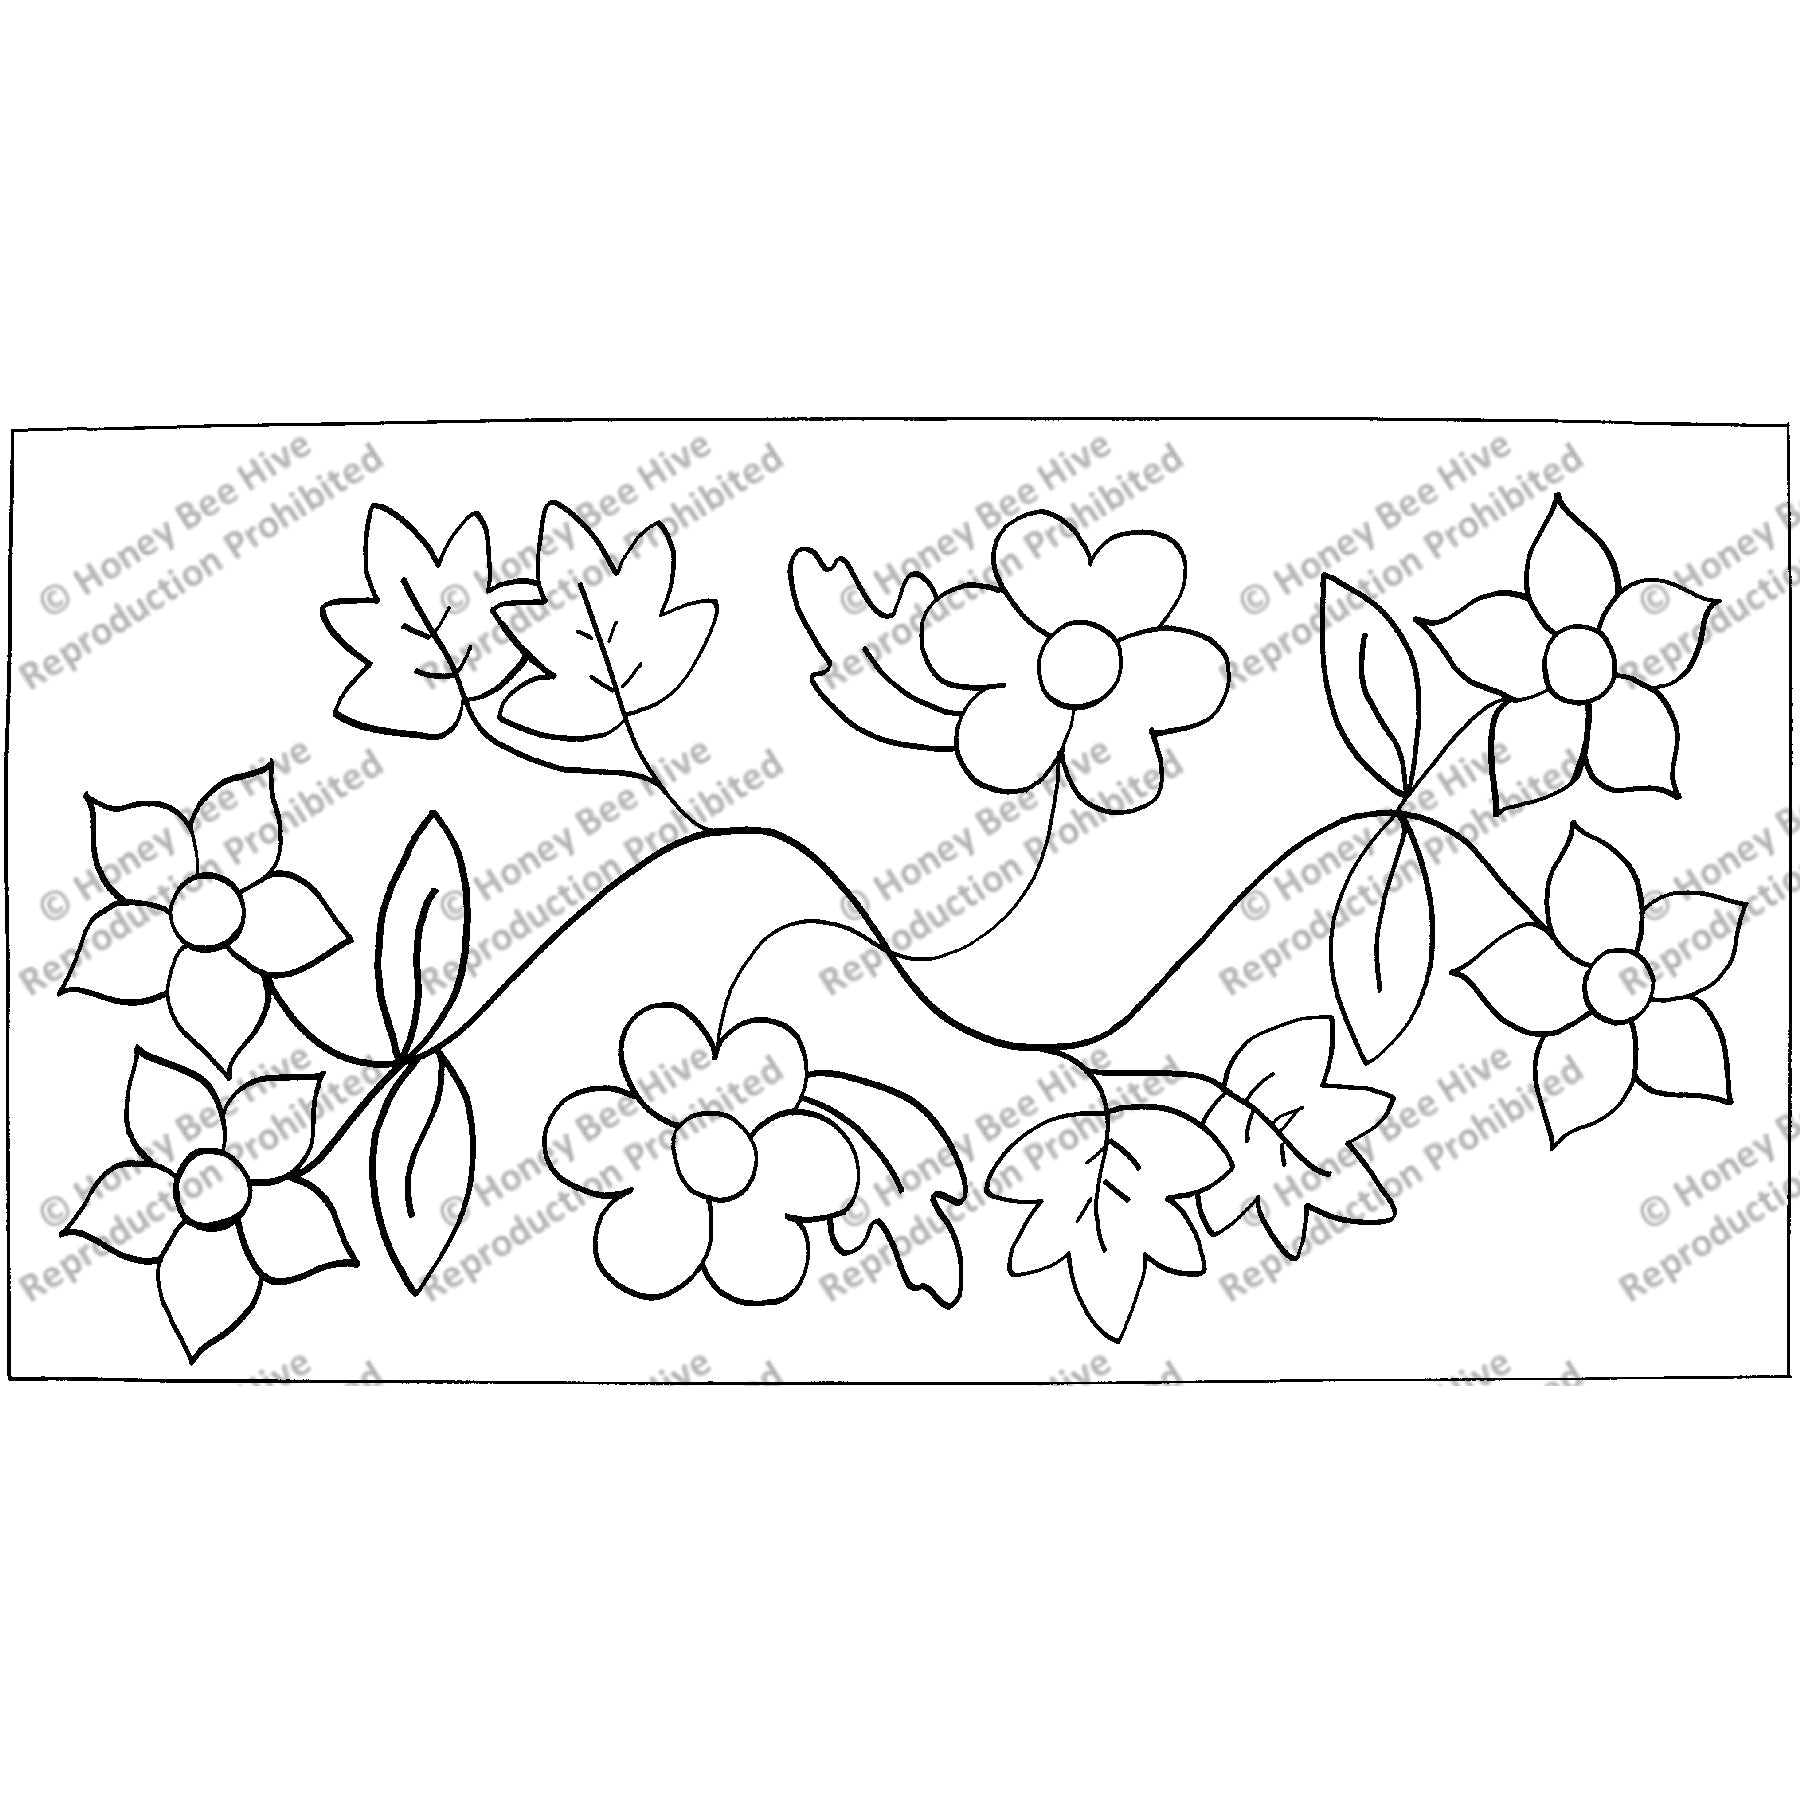 Primitive Floral Rug Runner - Small, rug hooking pattern